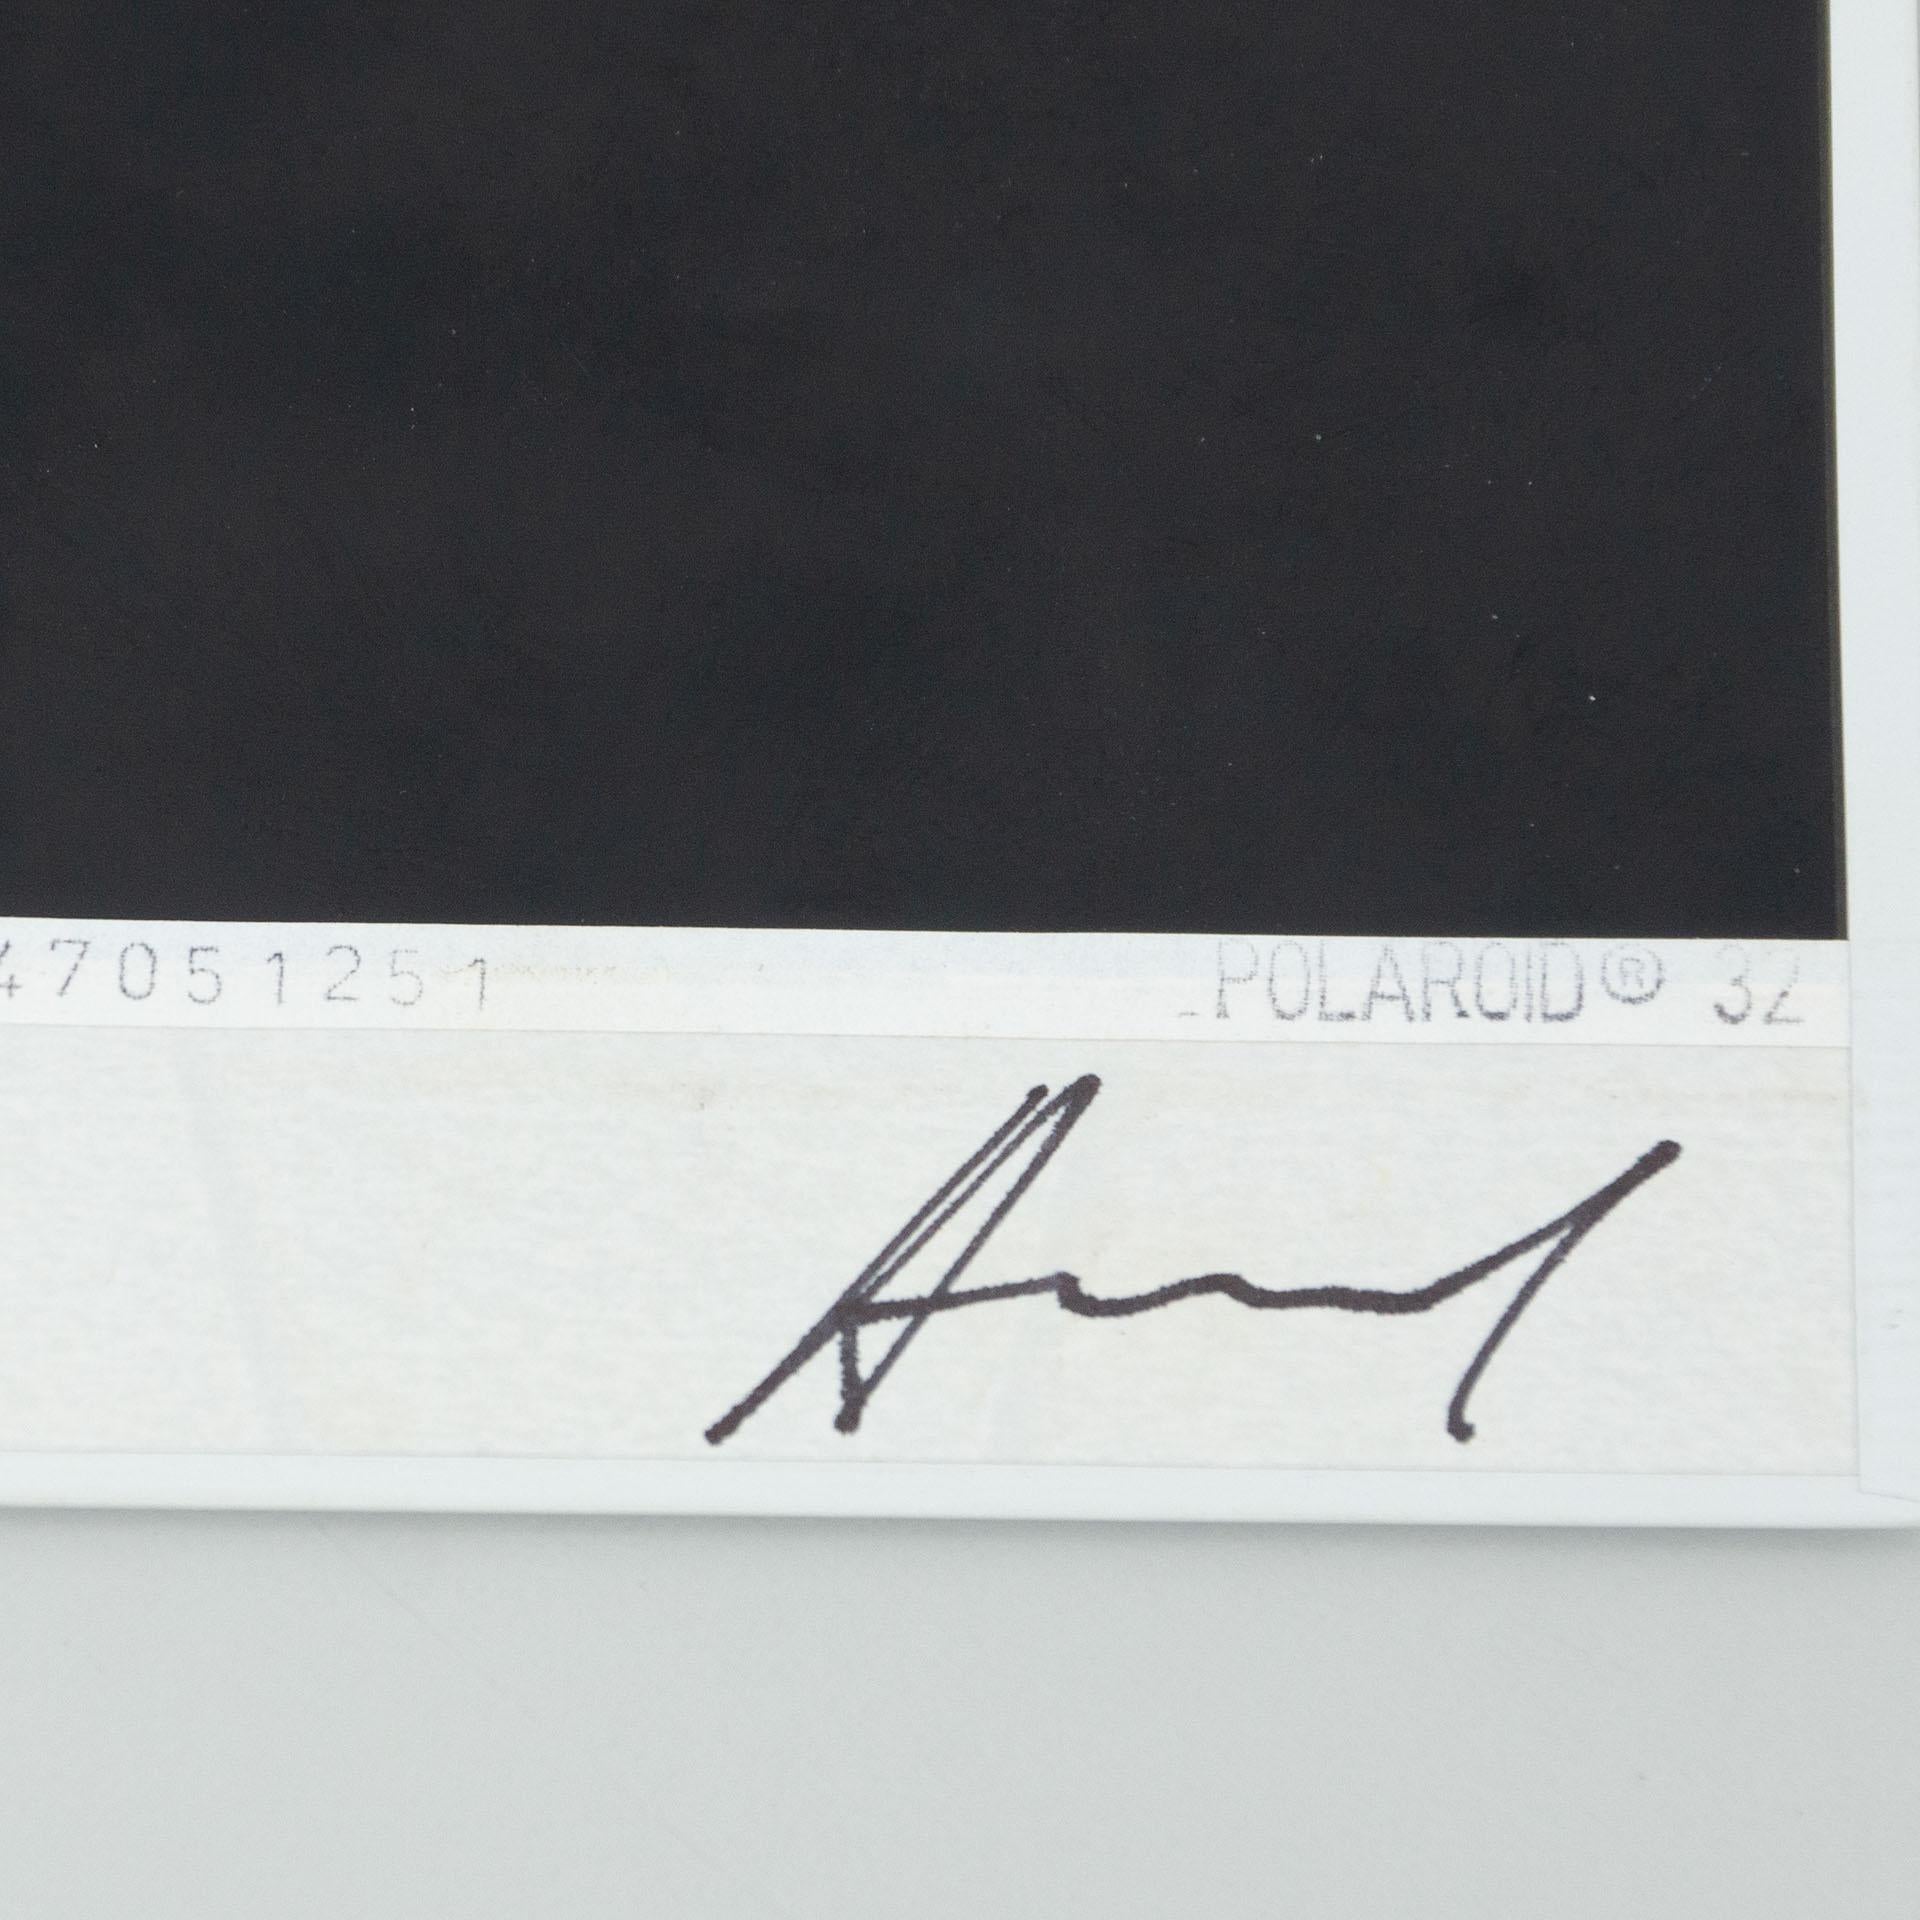 Miquel Arnal Set of Polaroid Photographs For Sale 5